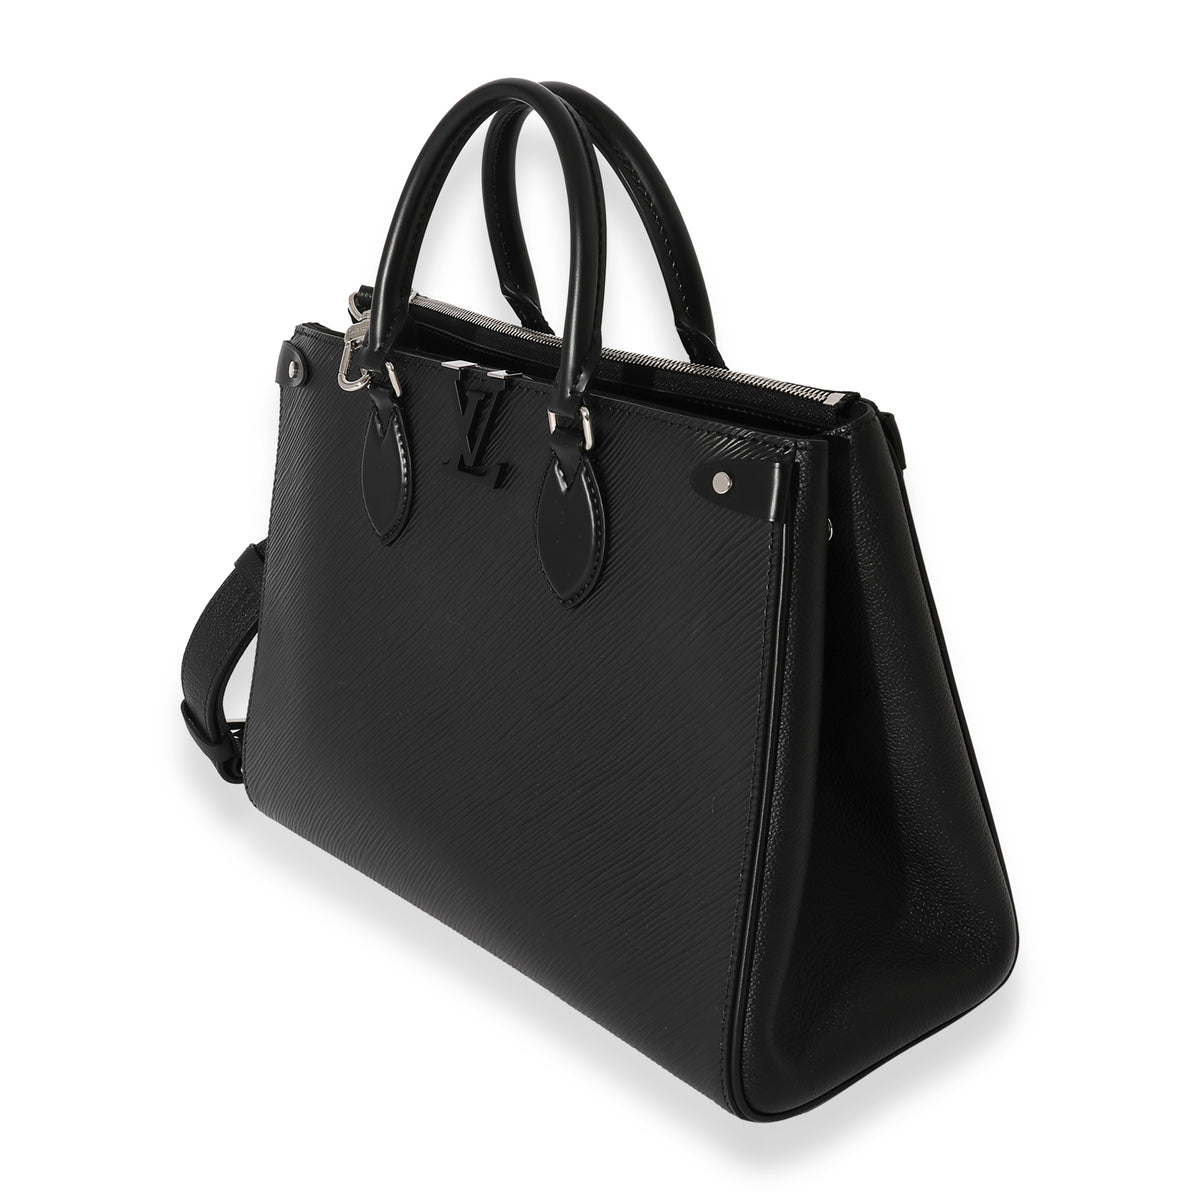 Grenelle Tote MM Epi Leather in Black - Handbags M57685